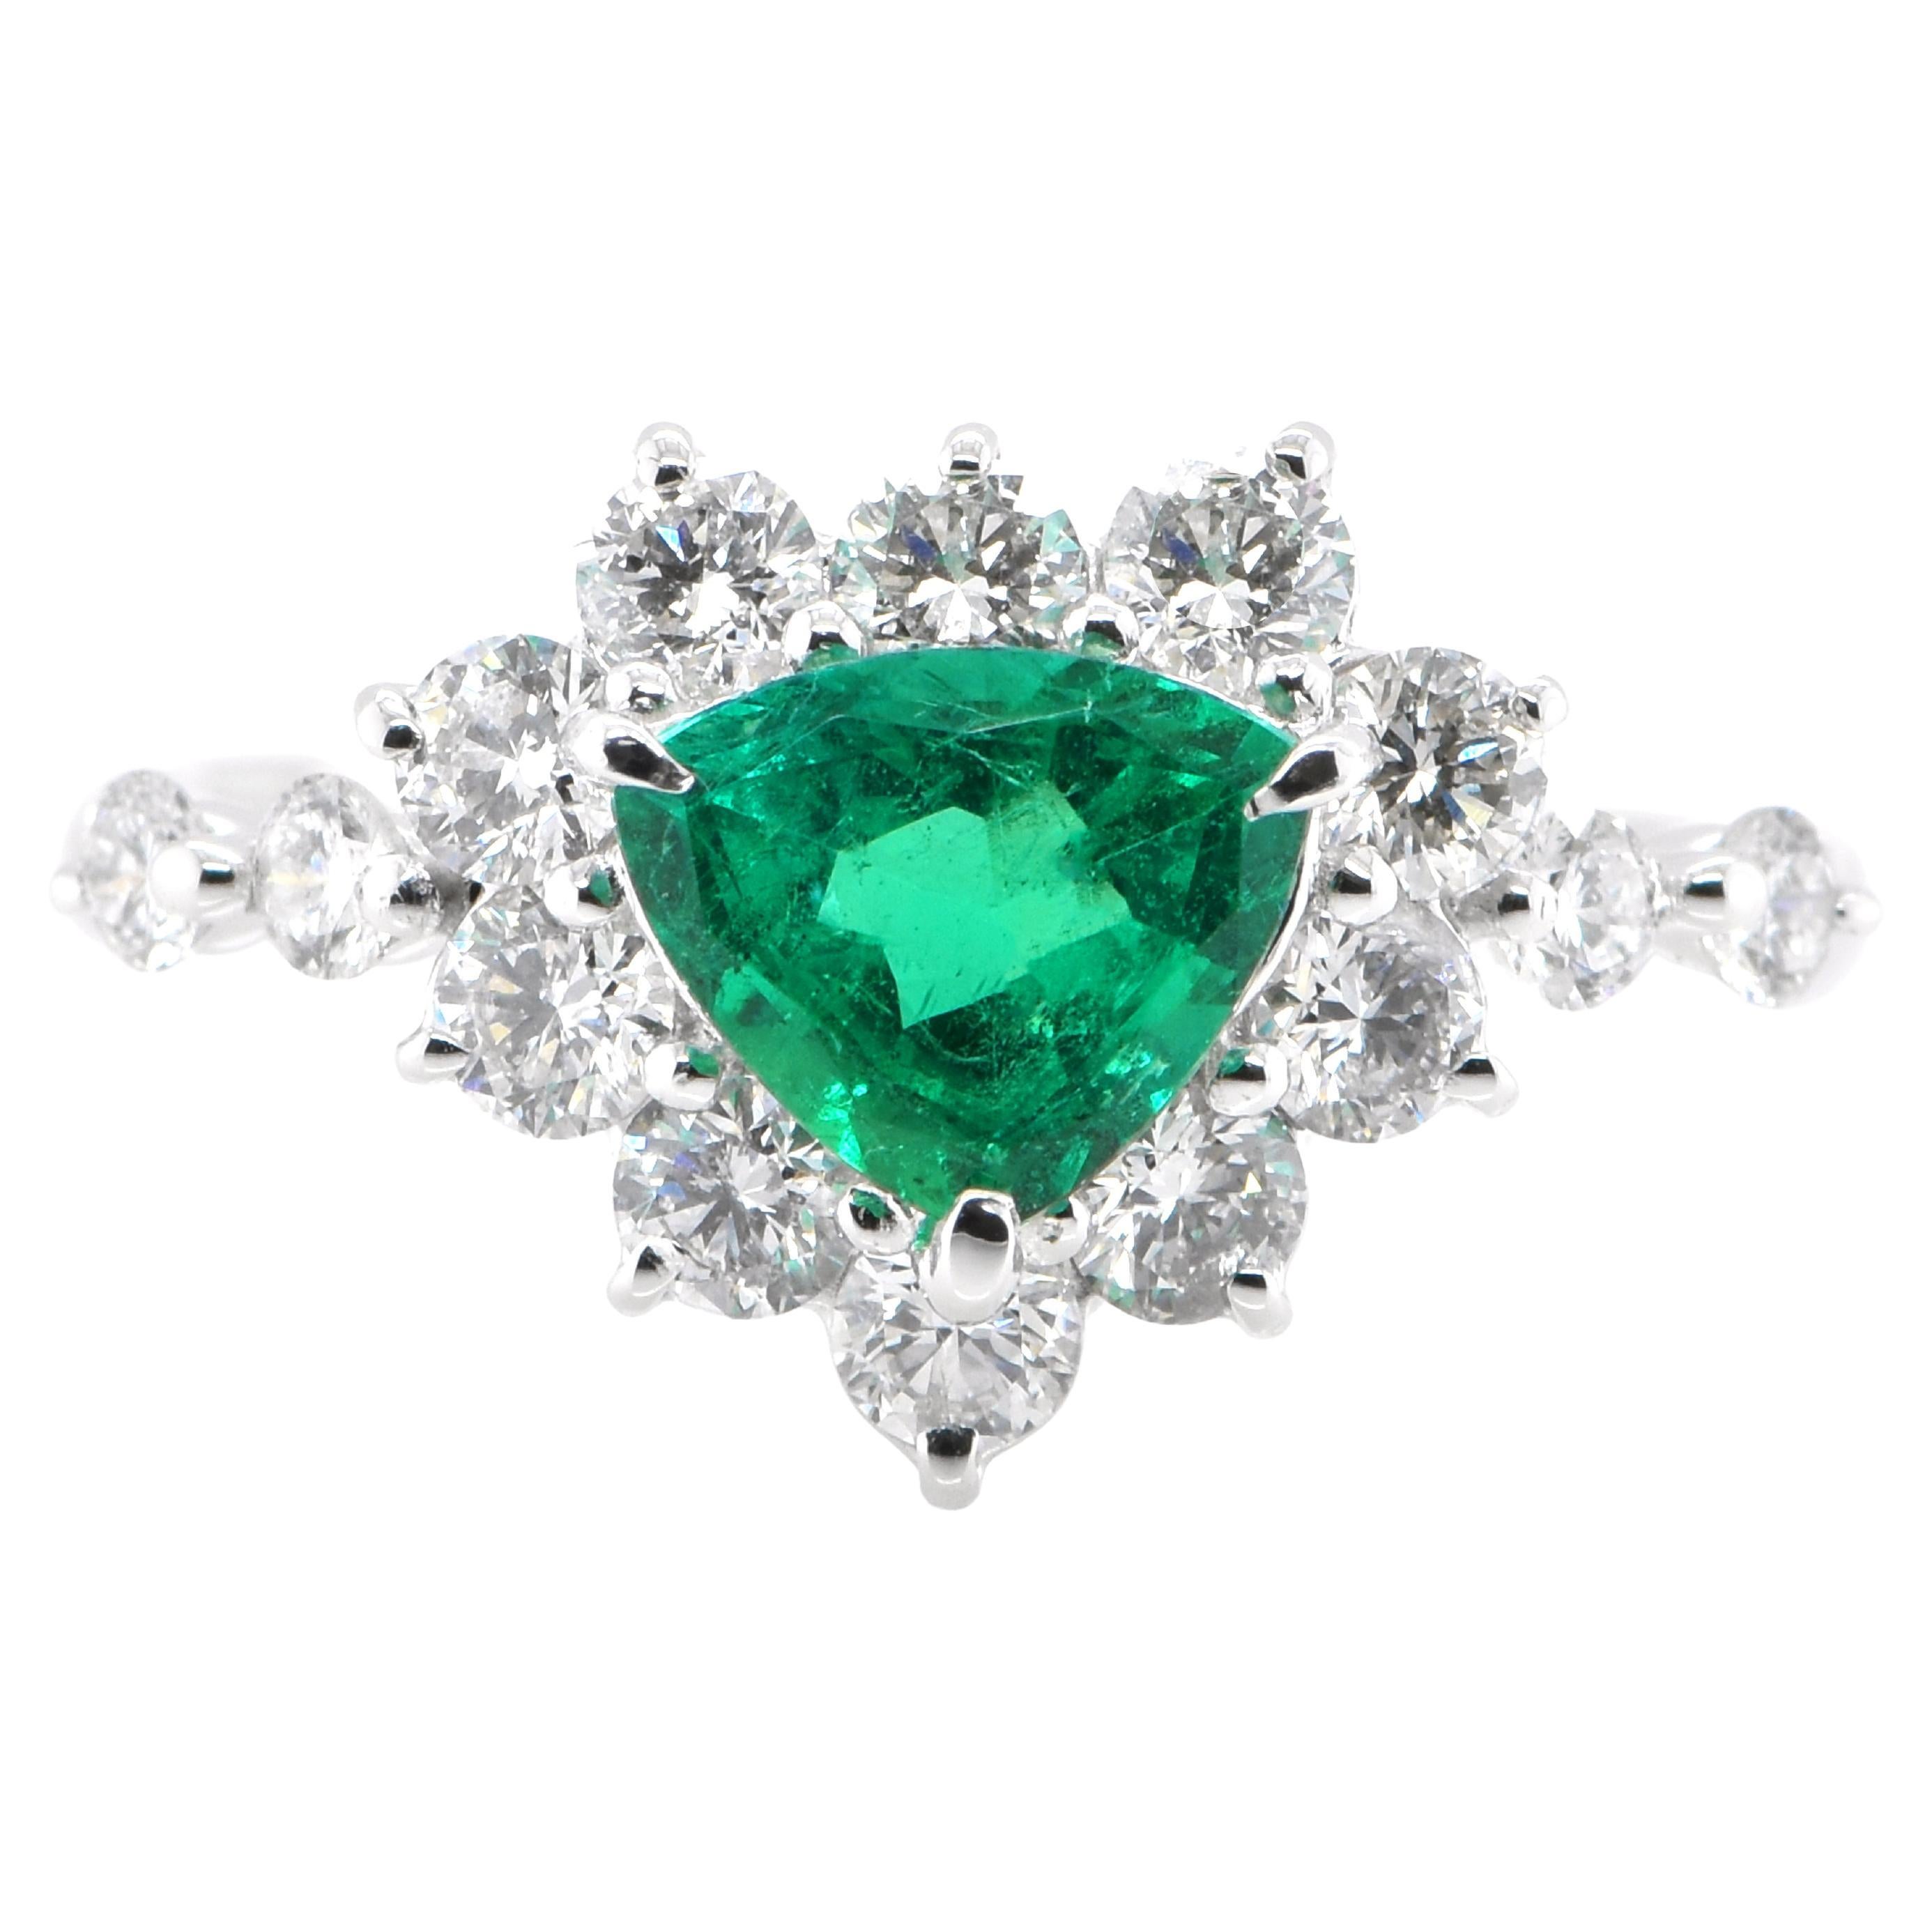  0.83 Carat Natural, Trillion Cut Emerald and Diamond Ring Set in Platinum